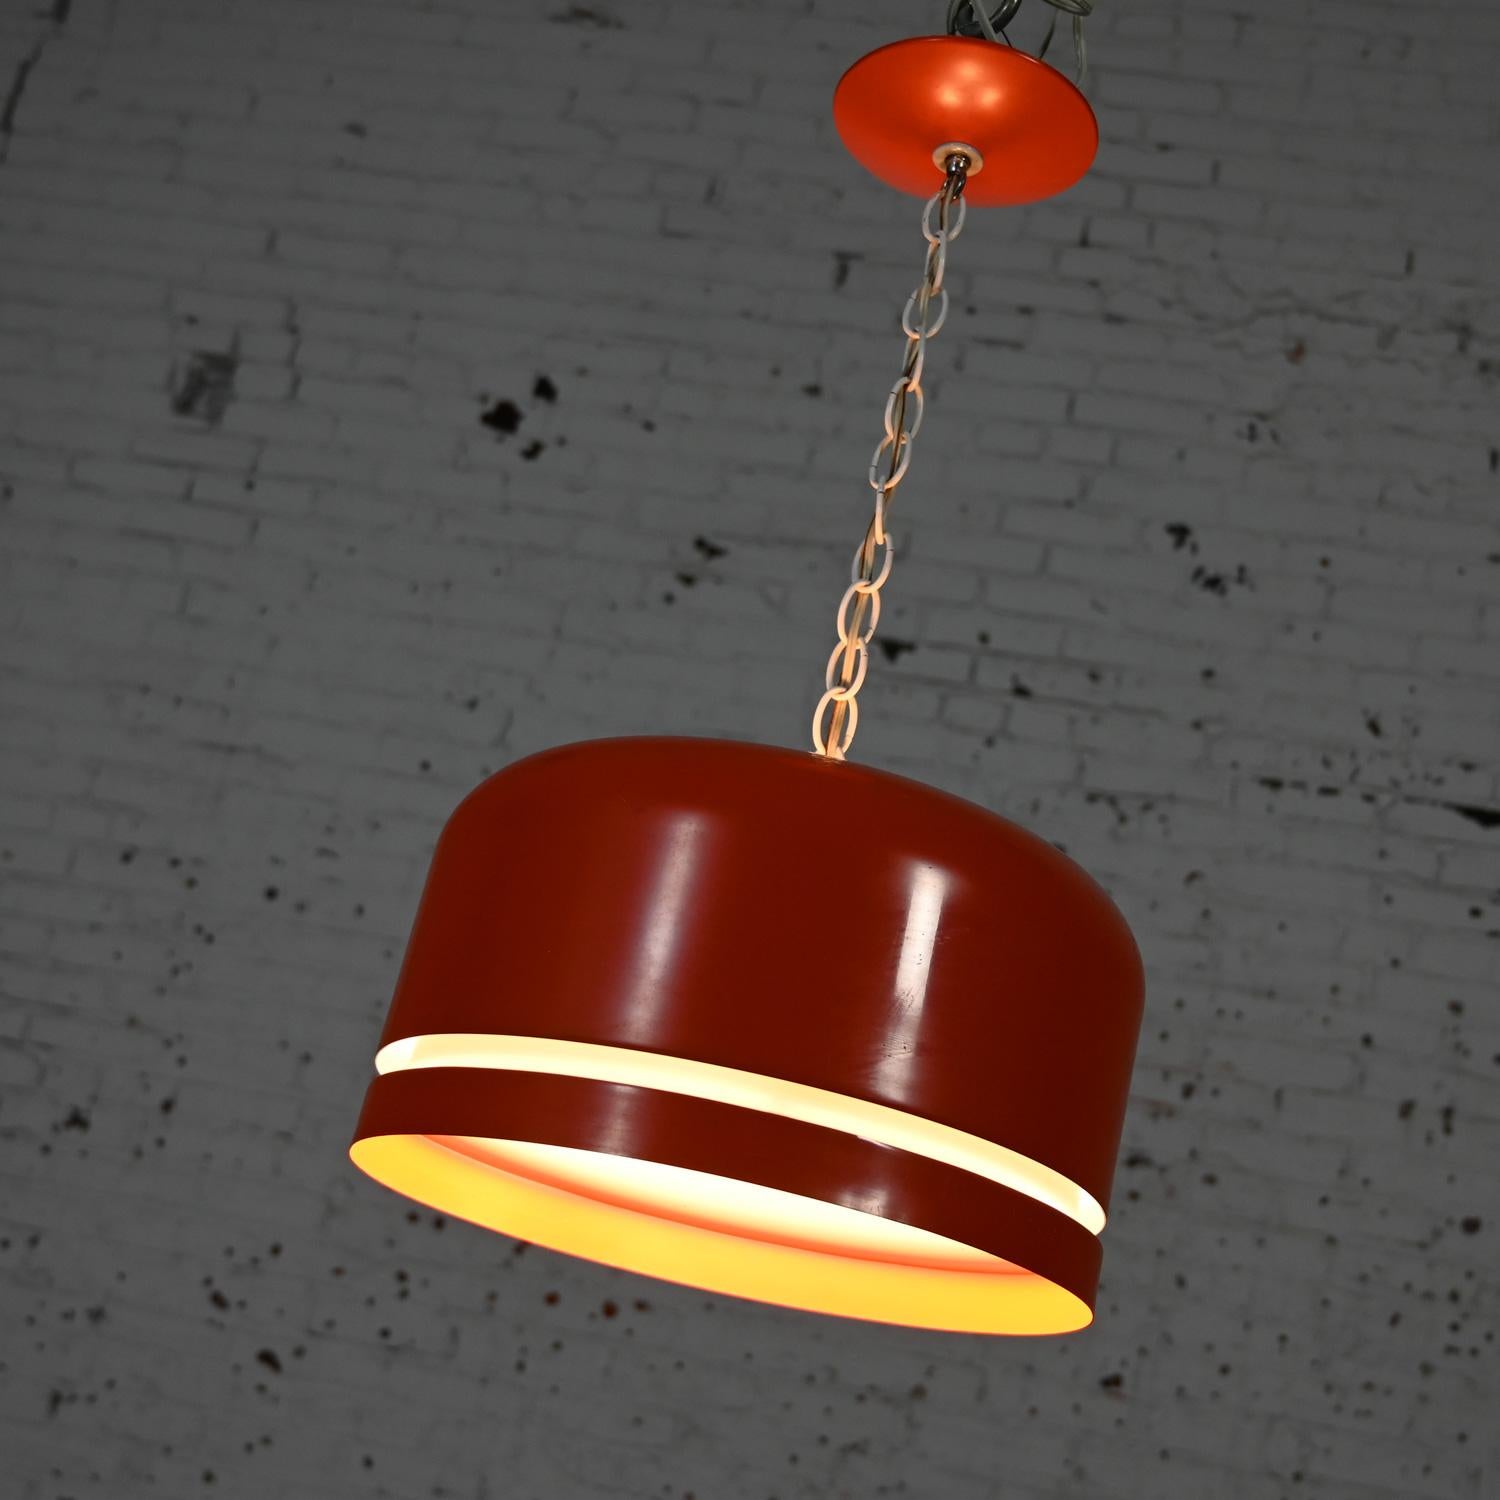 Mid Century Modern Orange Dome Pendant Hanging Light Fixture by Lightolier For Sale 4